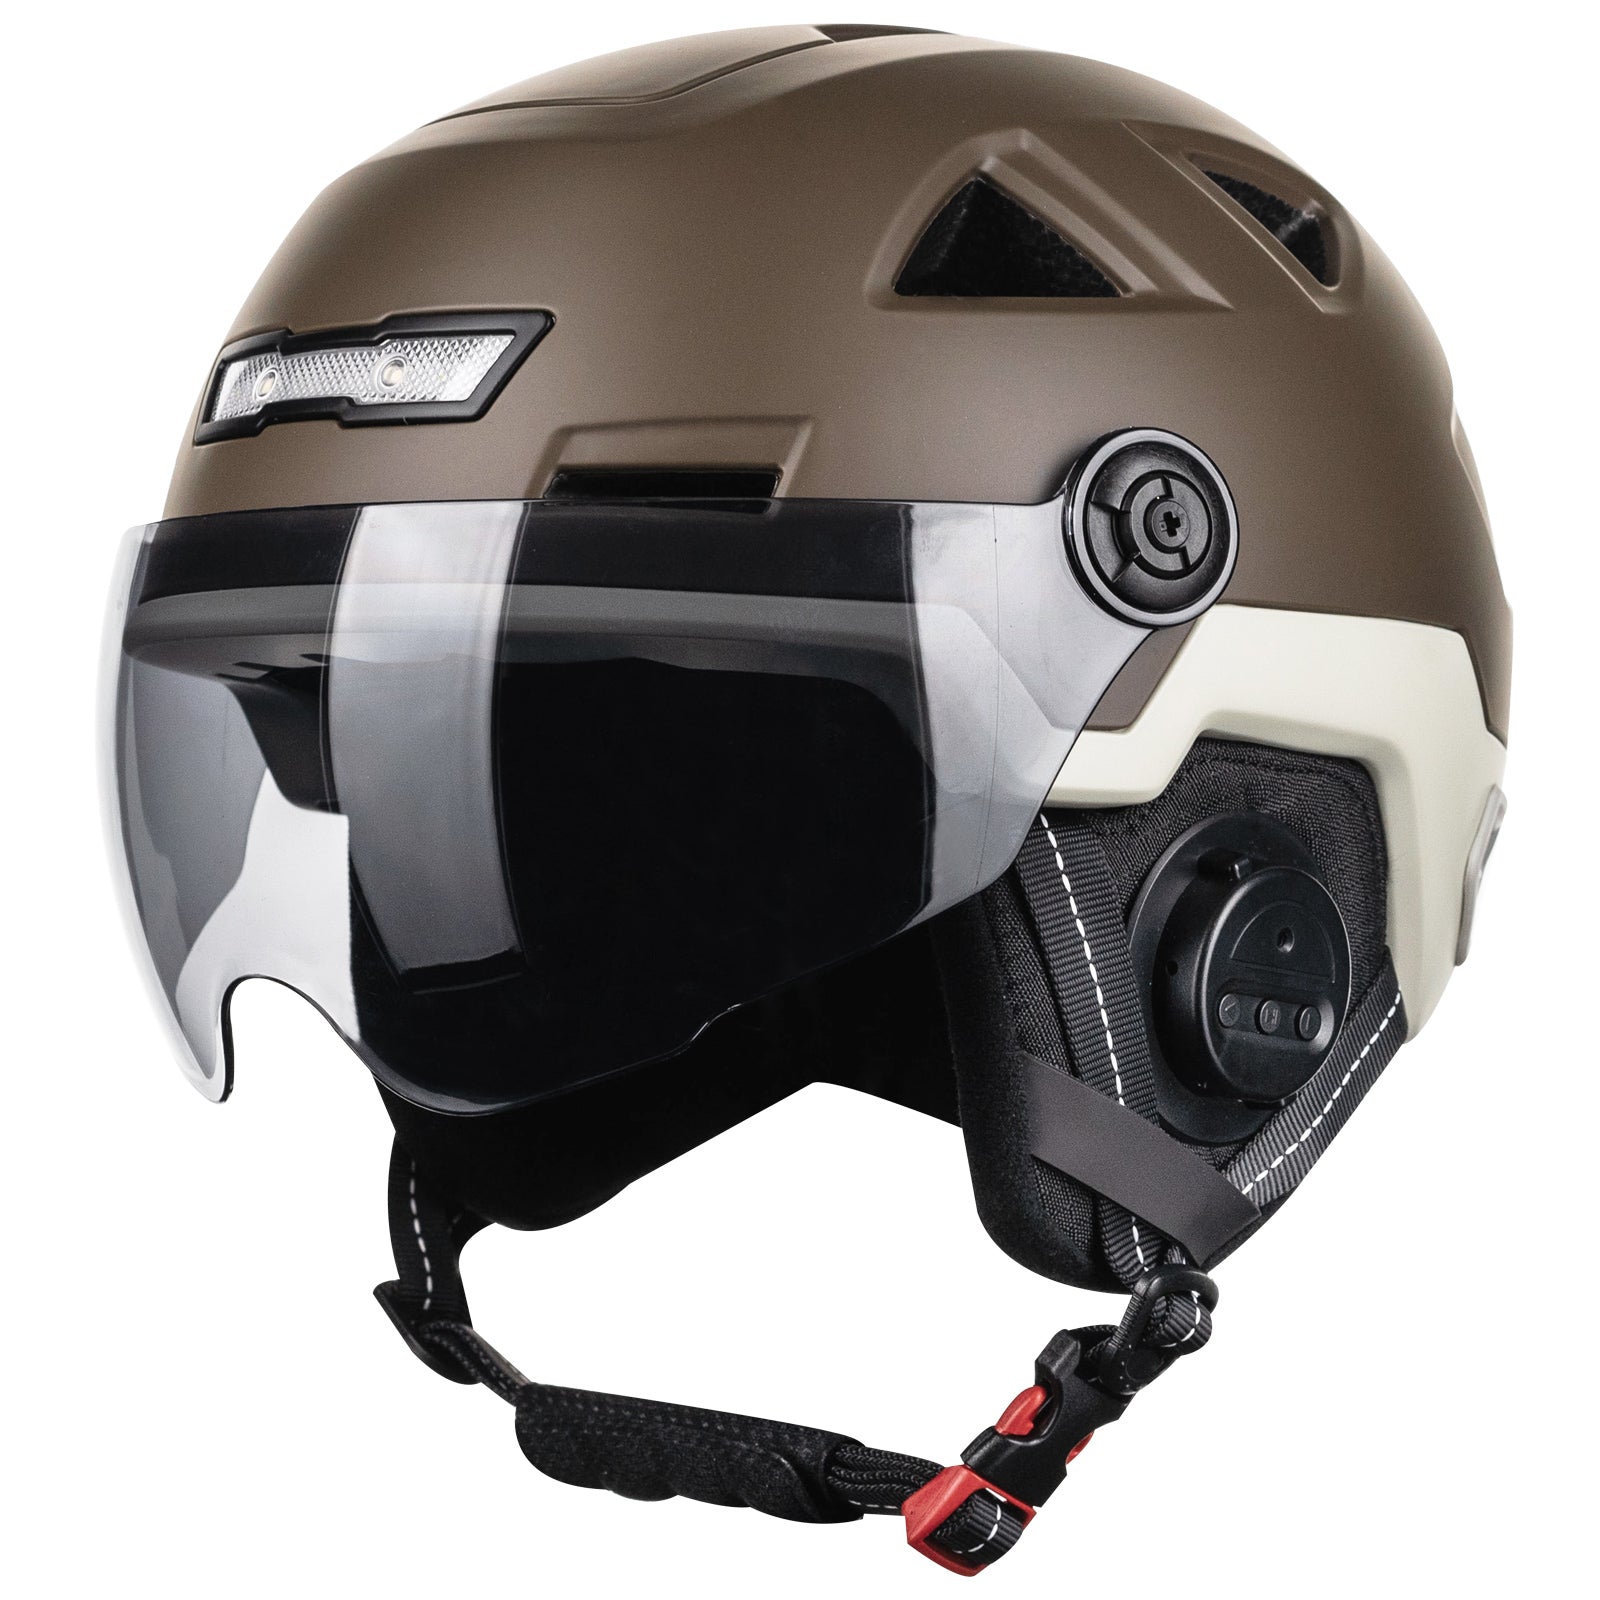 ILM Smart Helmet for Scooters Model E3-12LS